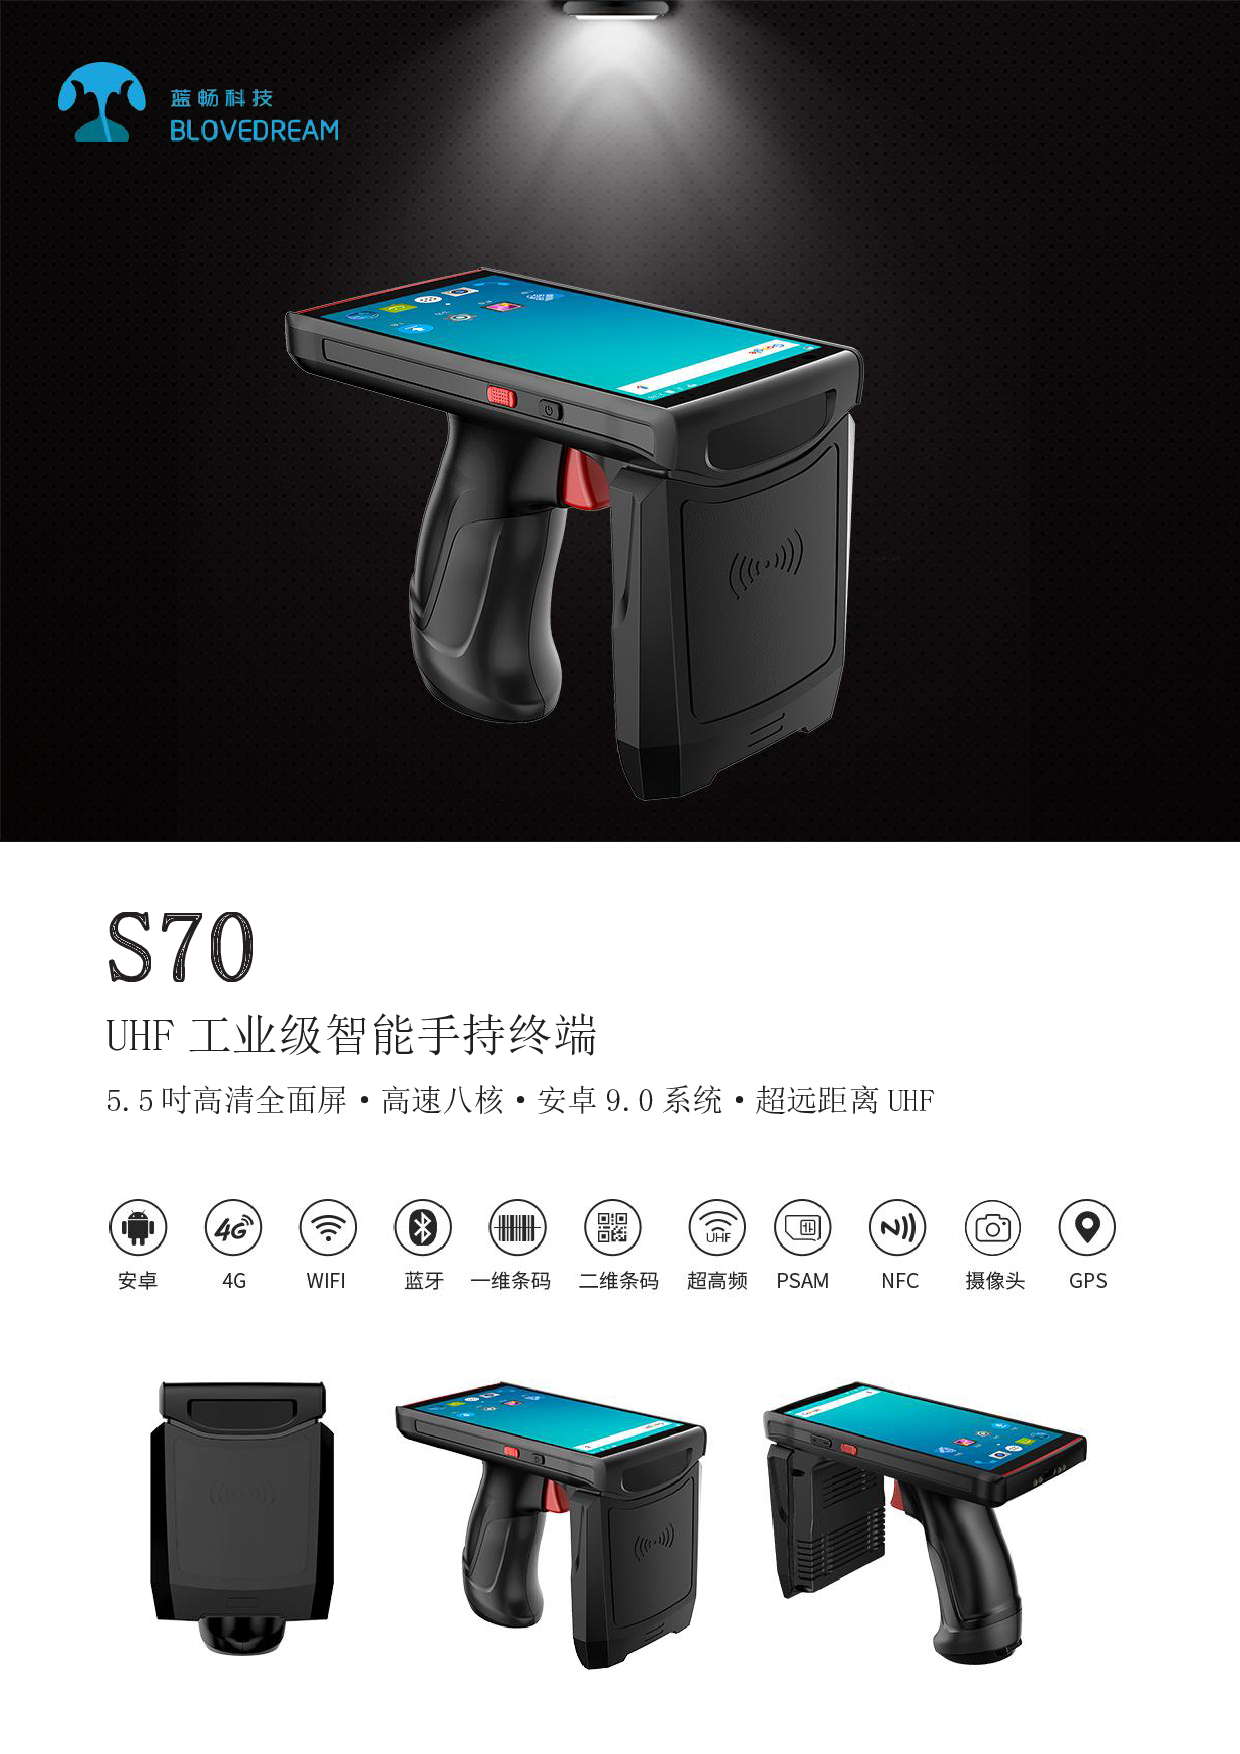 UHF工业级智能手持终端S70 PDA图片